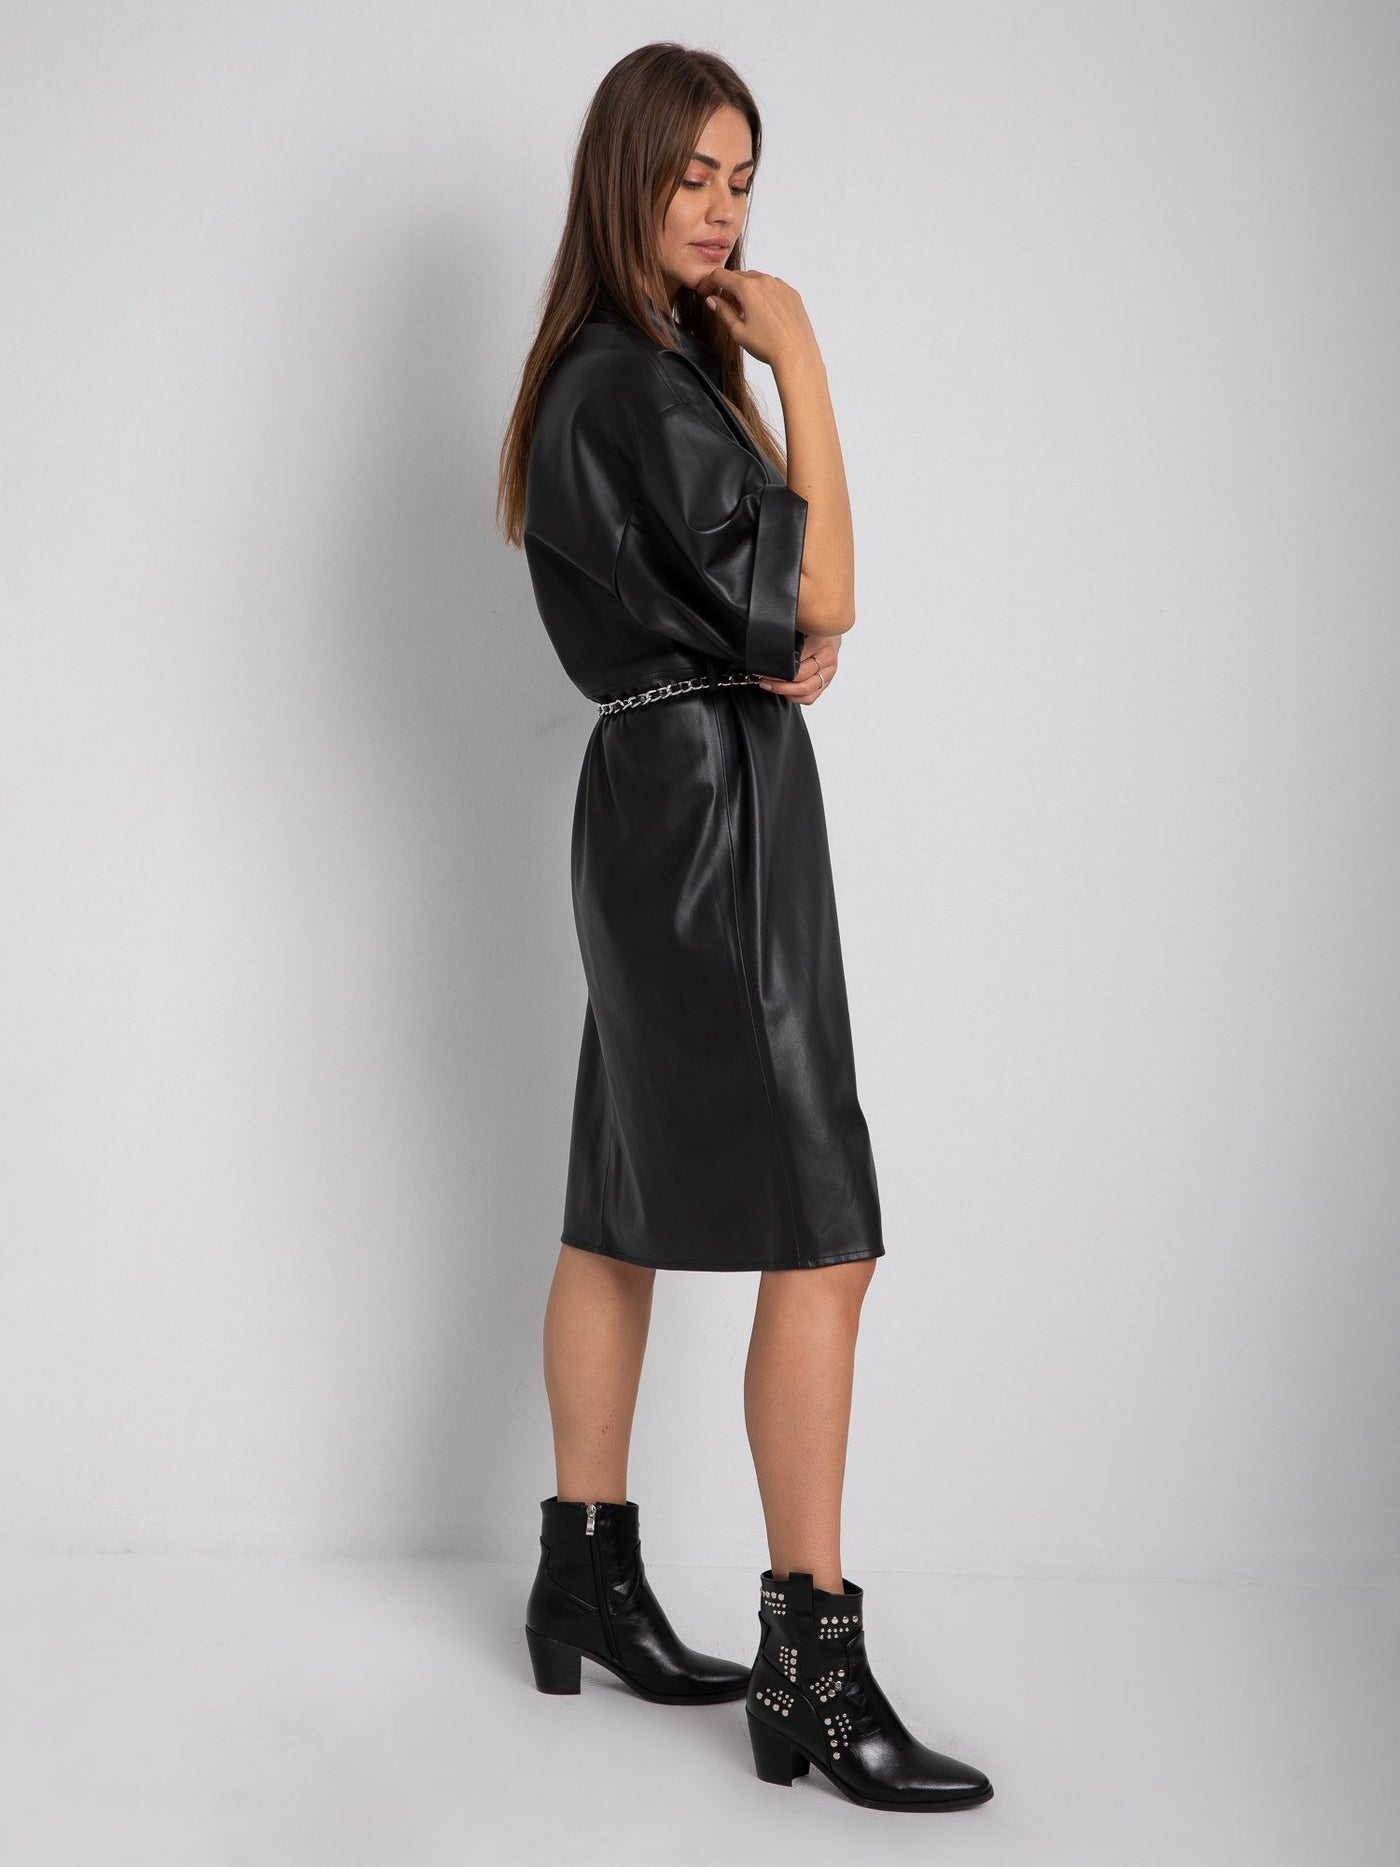 Knee Length Dress - Leather Material - 2/3 Kimono Sleeves